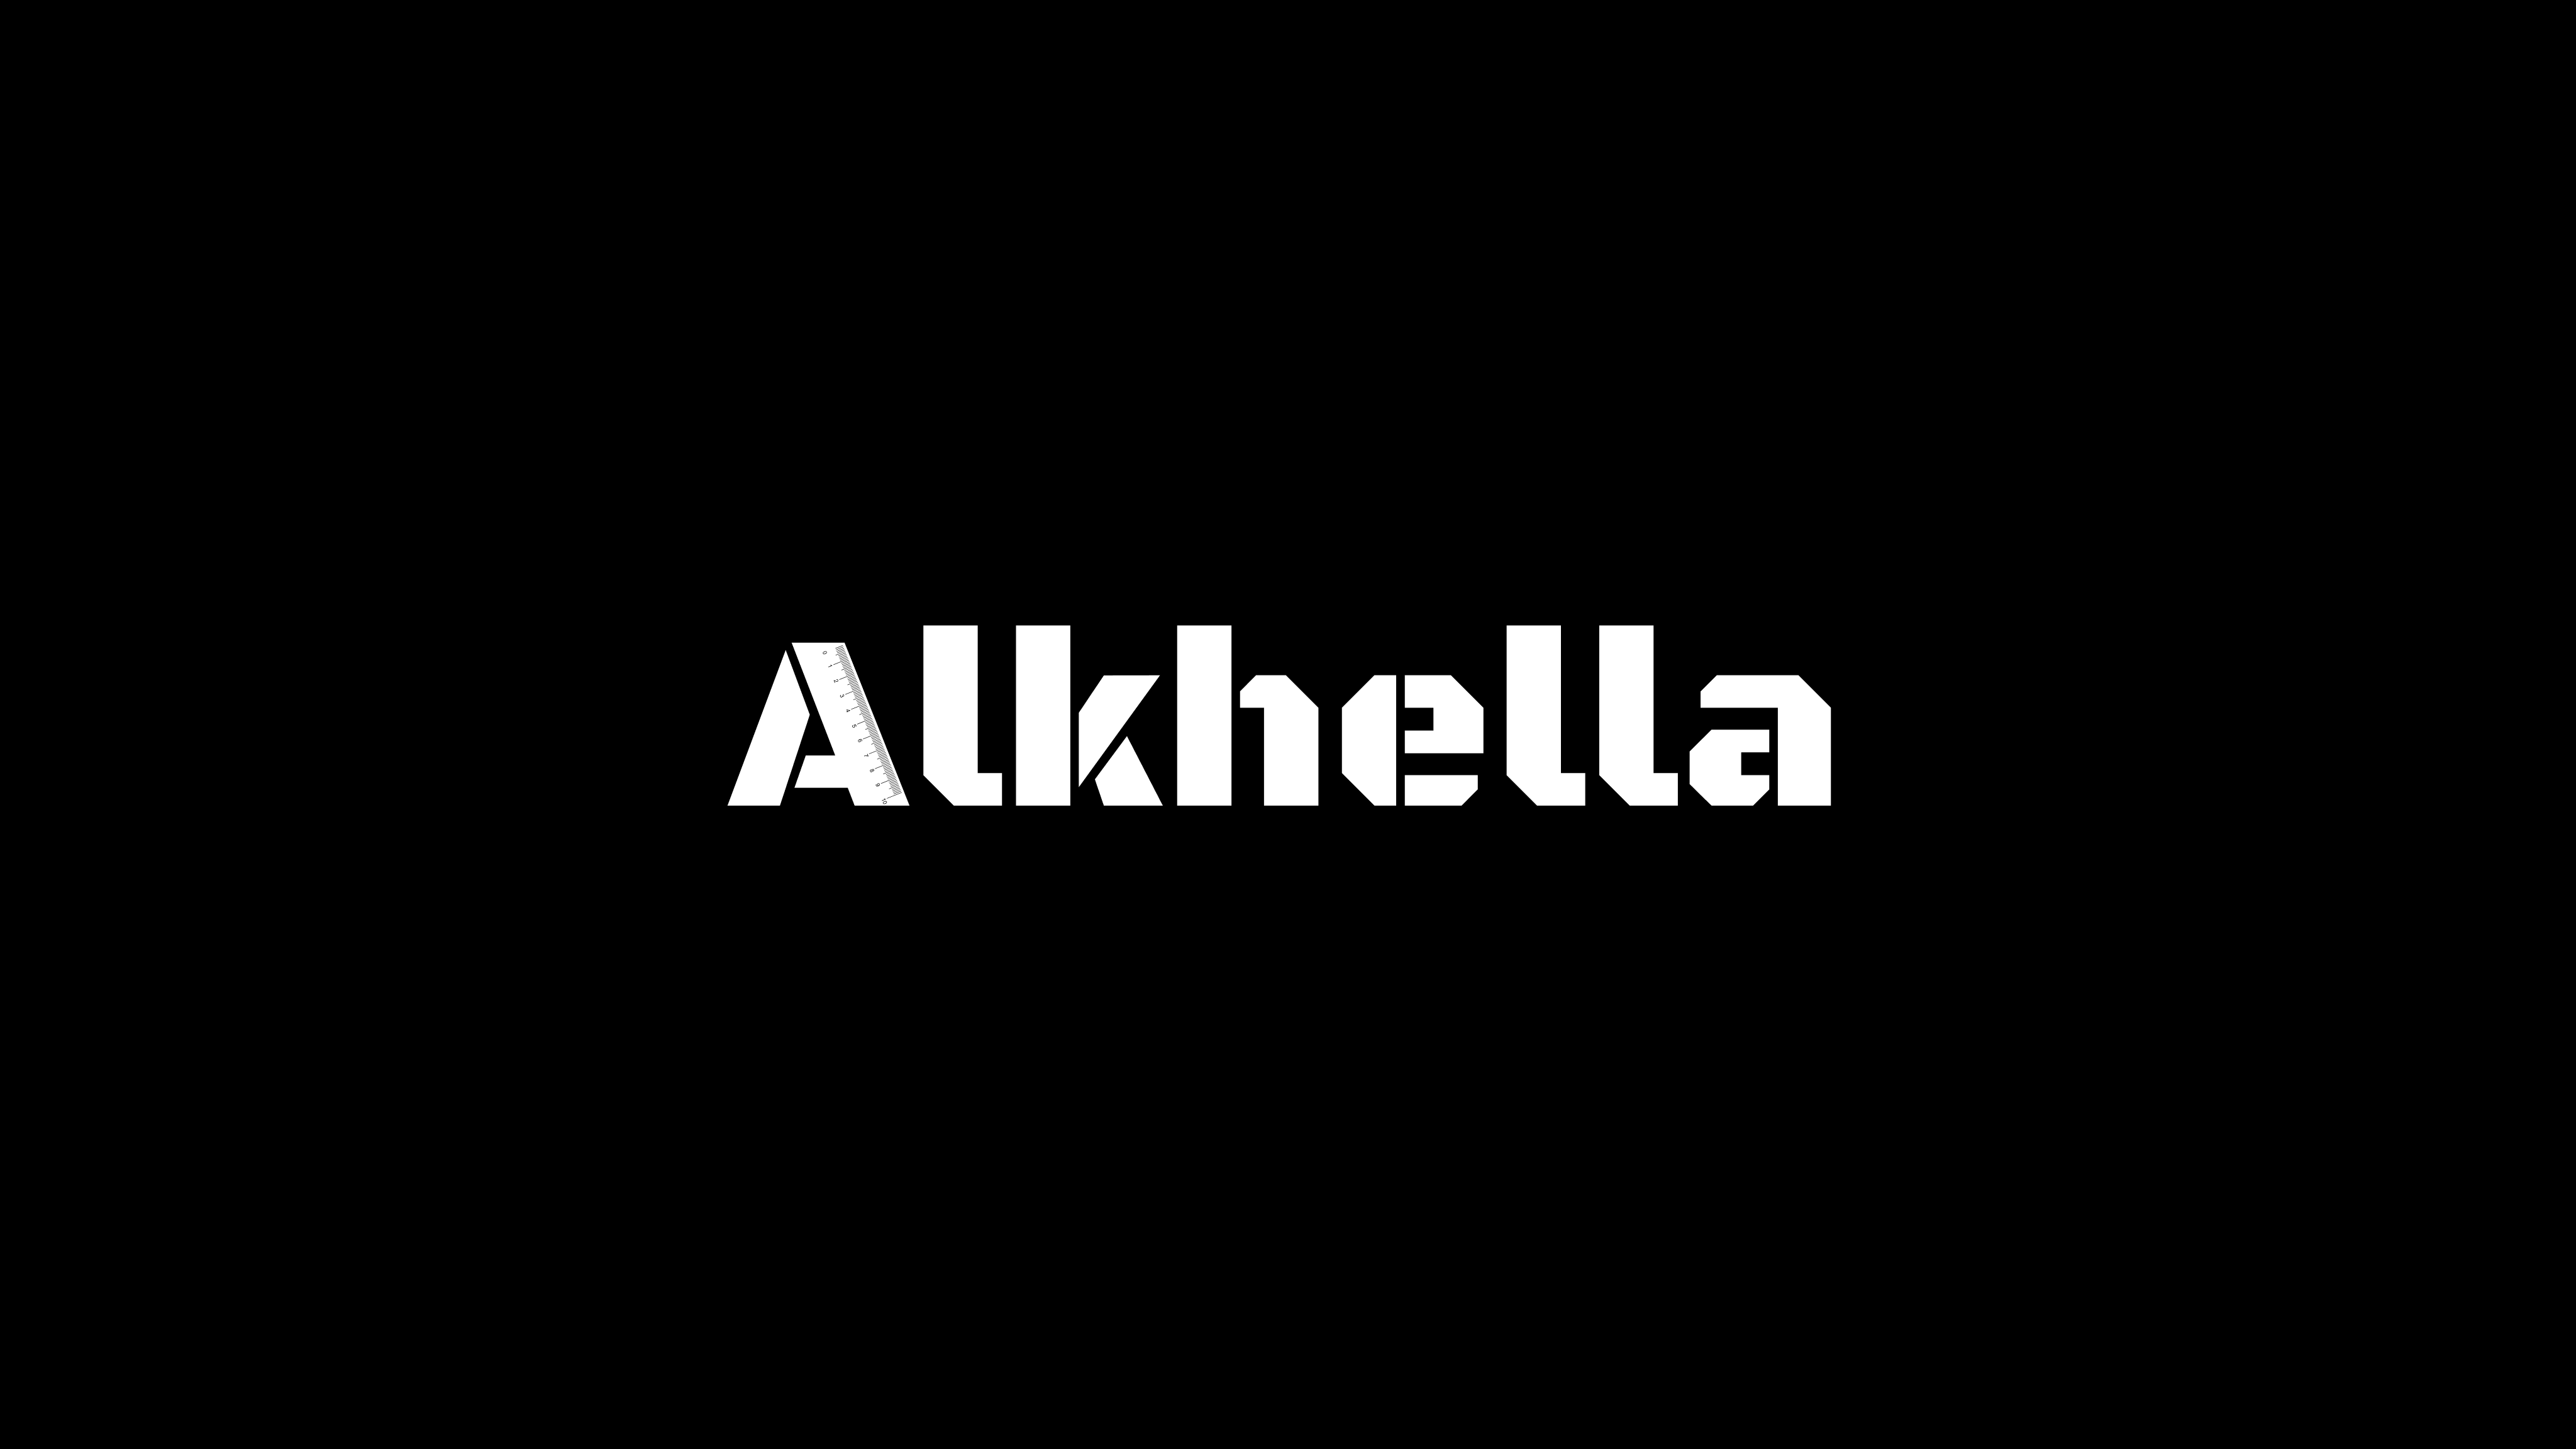 Alkhella Inc